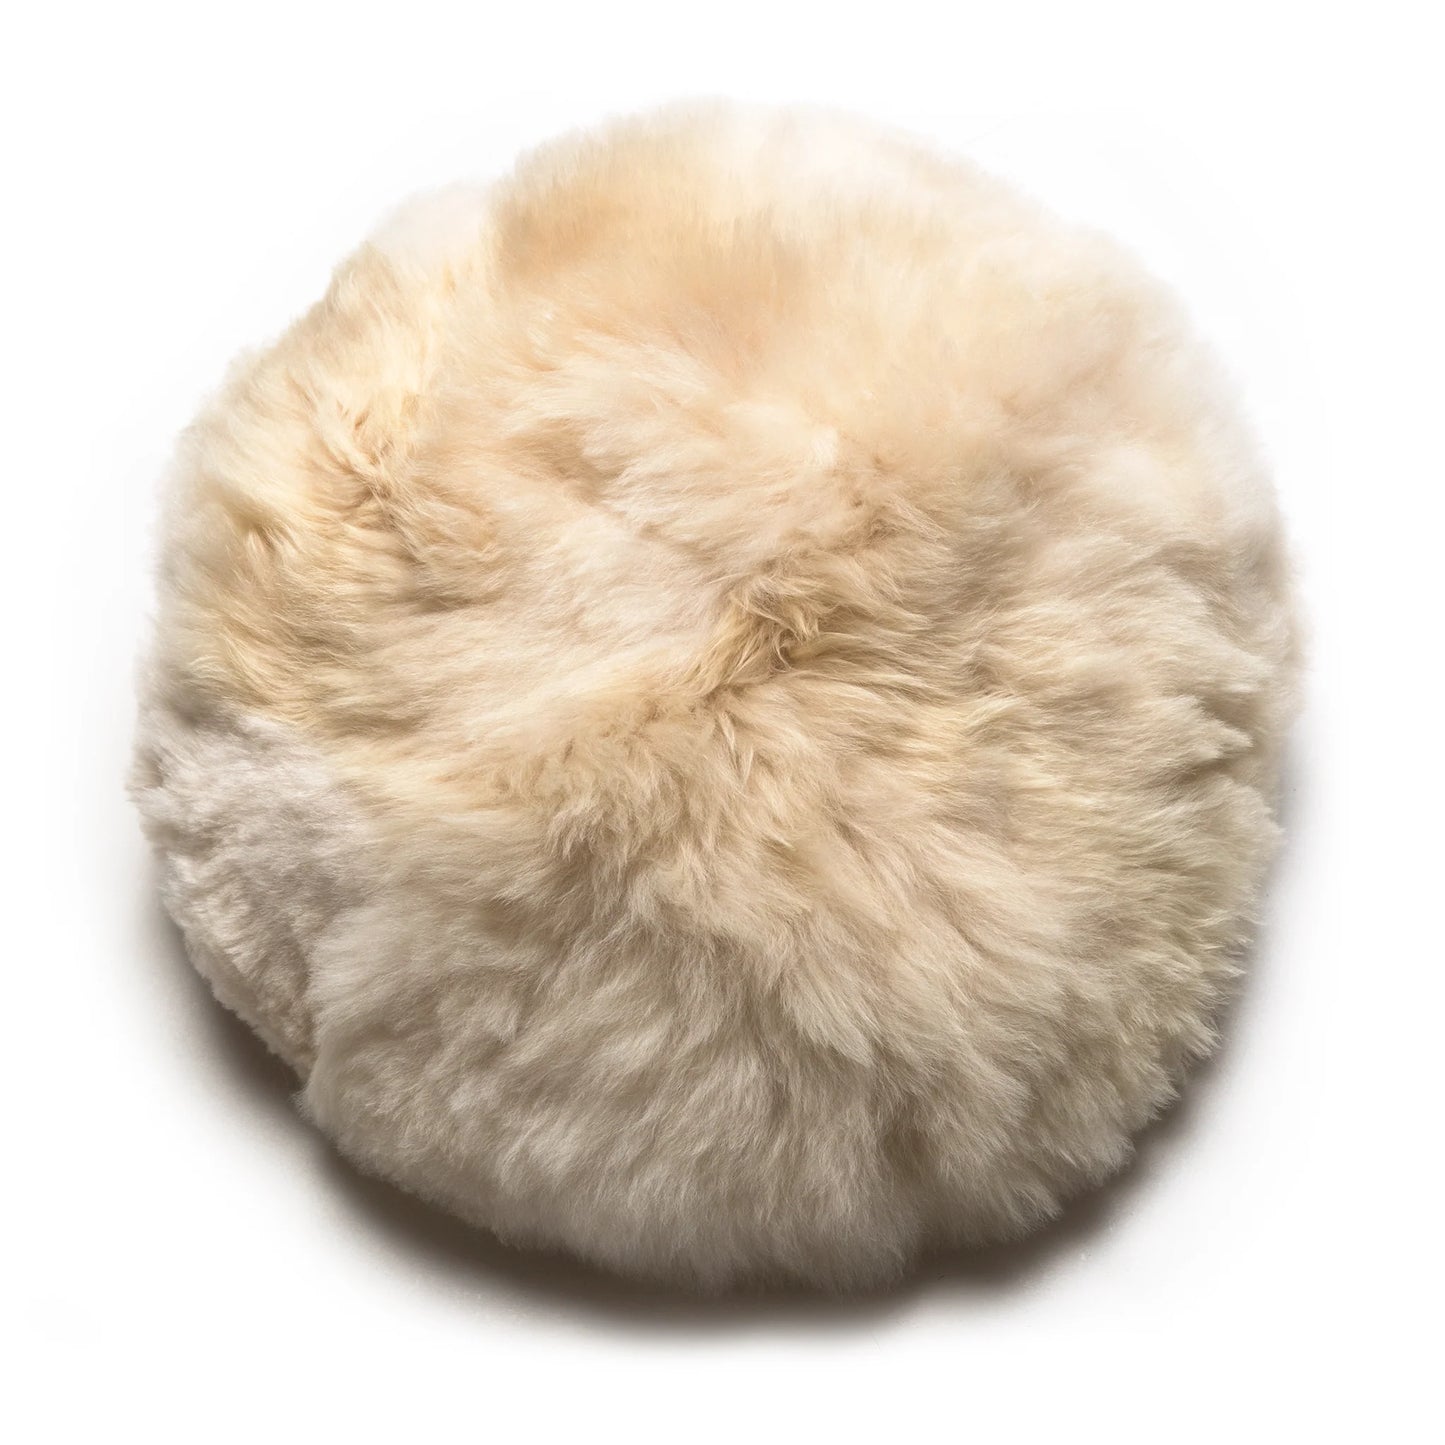 Intiearth Alpaca Moon Pillow: Crema